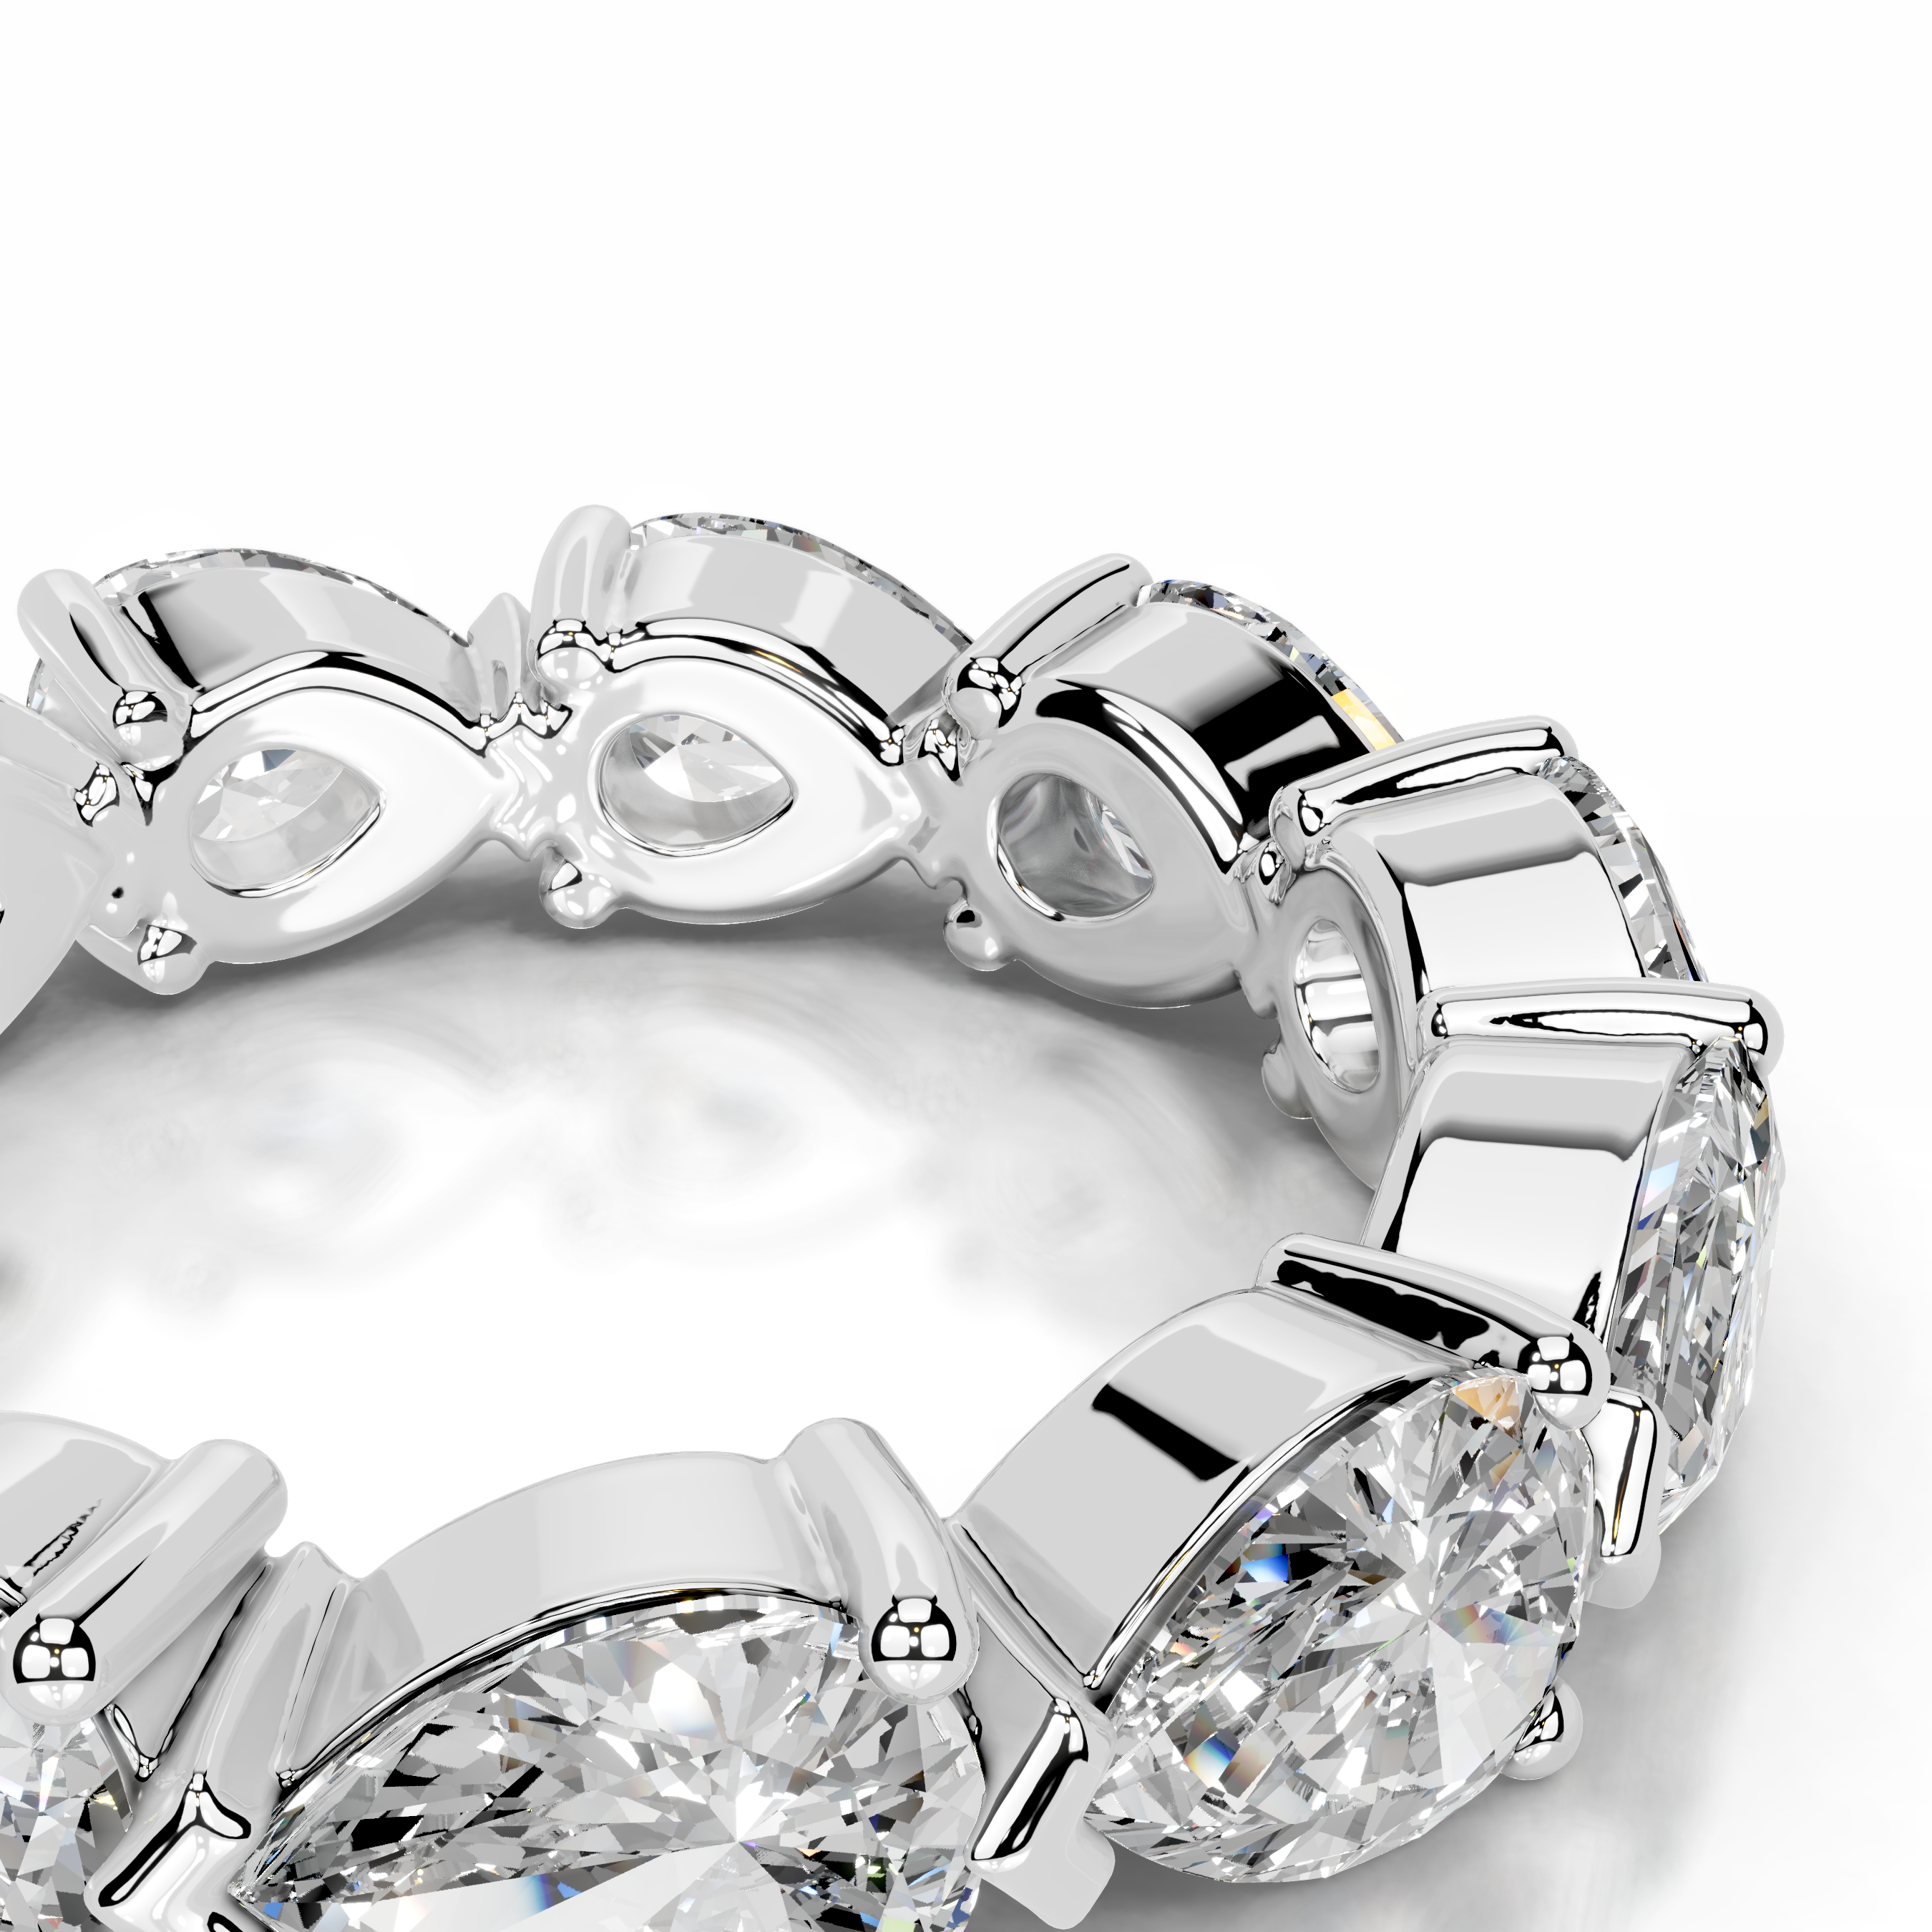 Tyrell Diamond Wedding Ring   (4.50 Carat) -14K White Gold